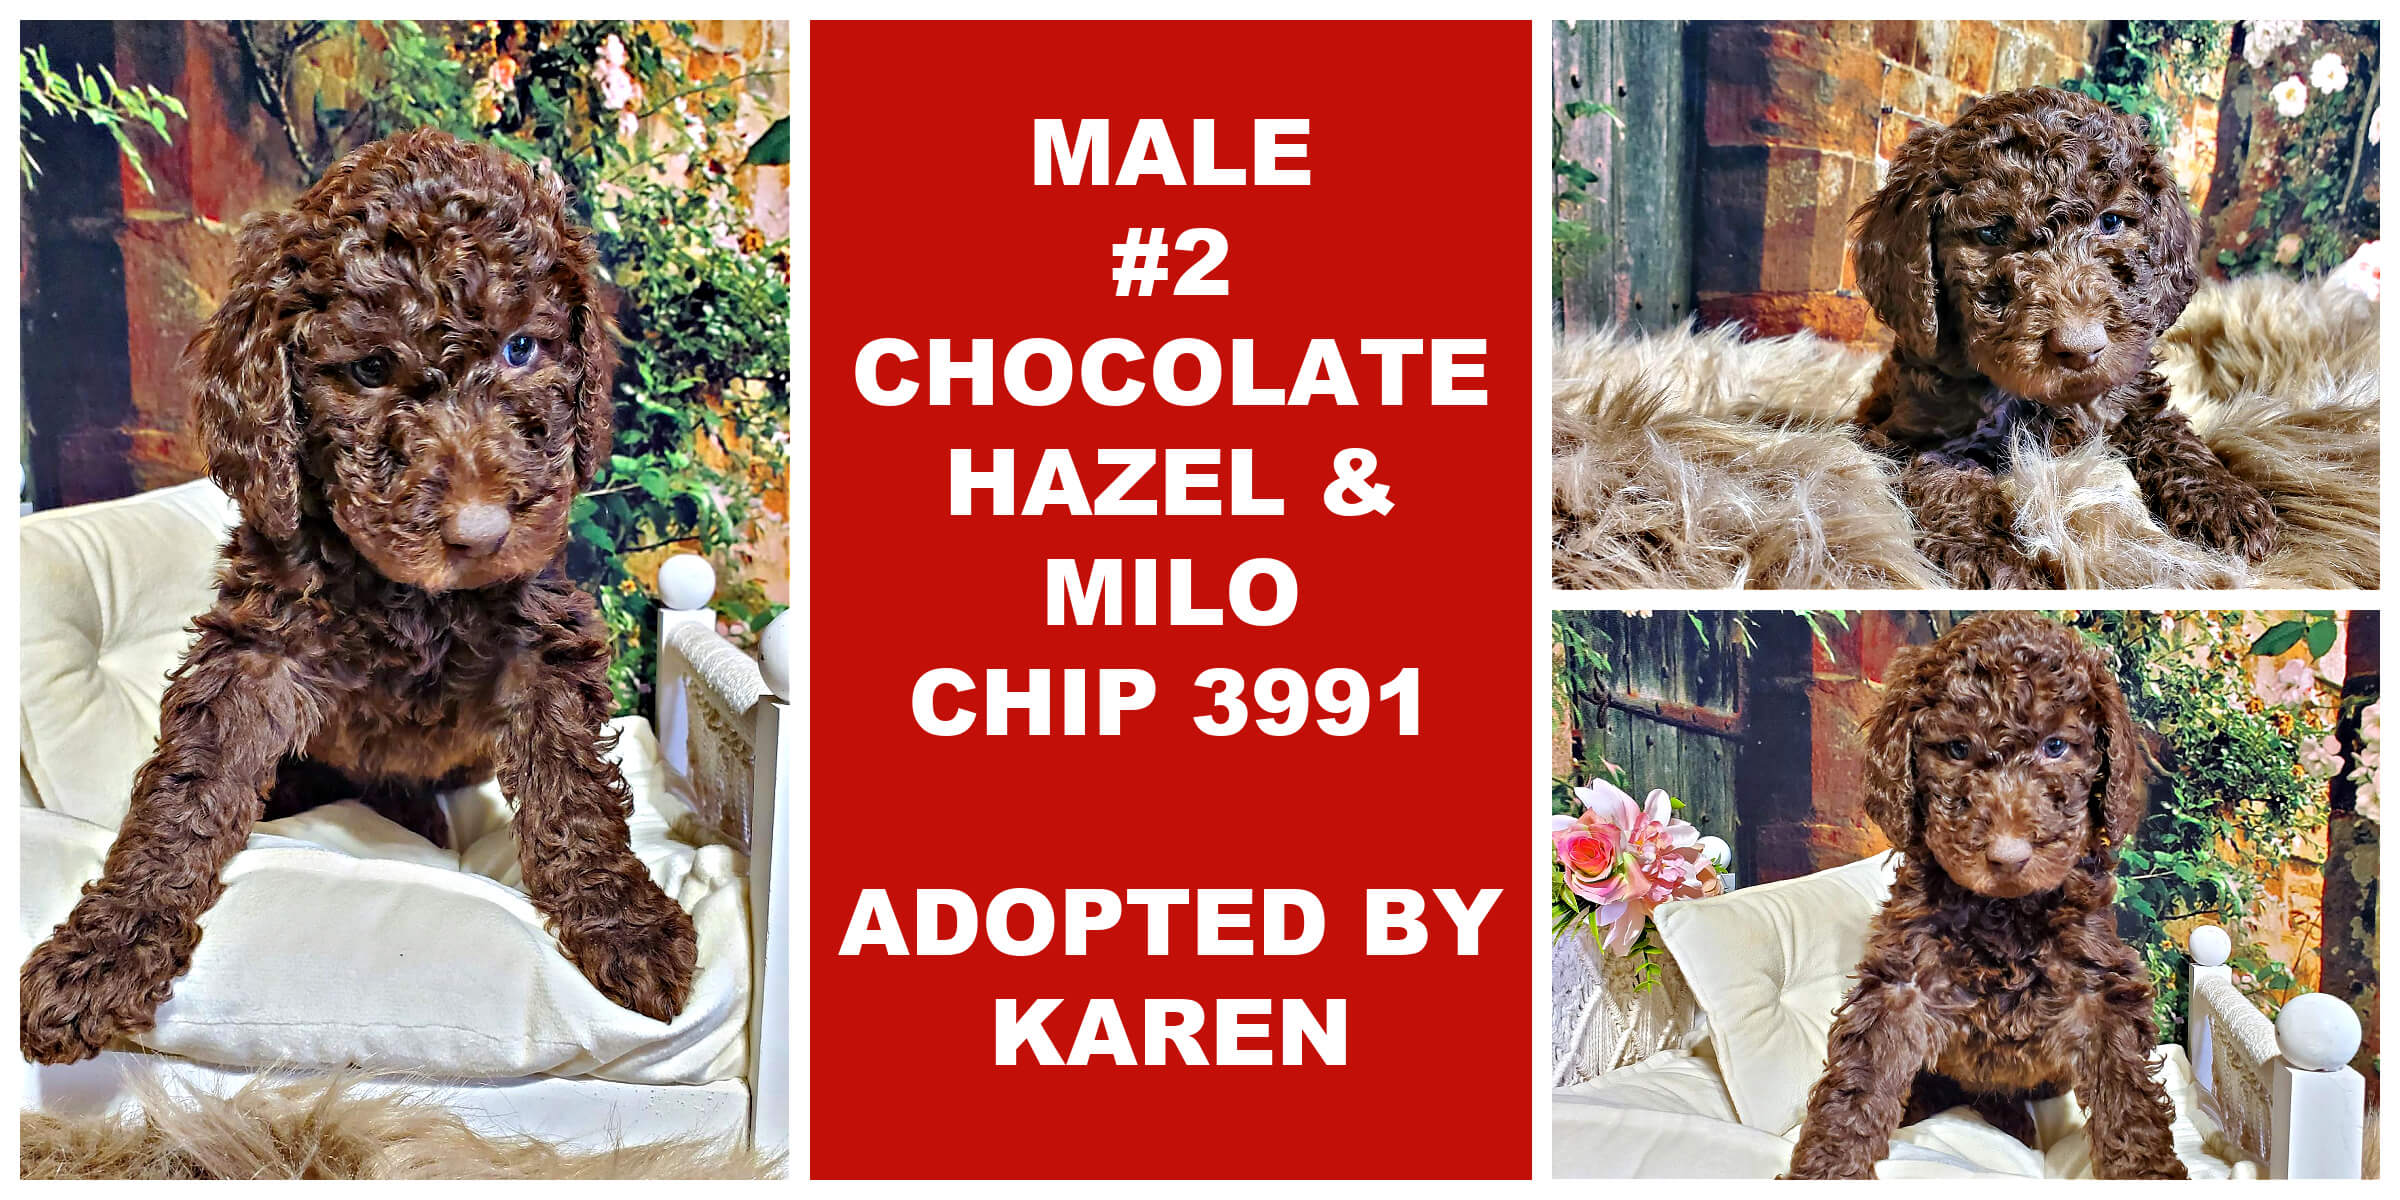 MALE # 2 CHOCOLATE HAZEL & MILO CHIP 3991..